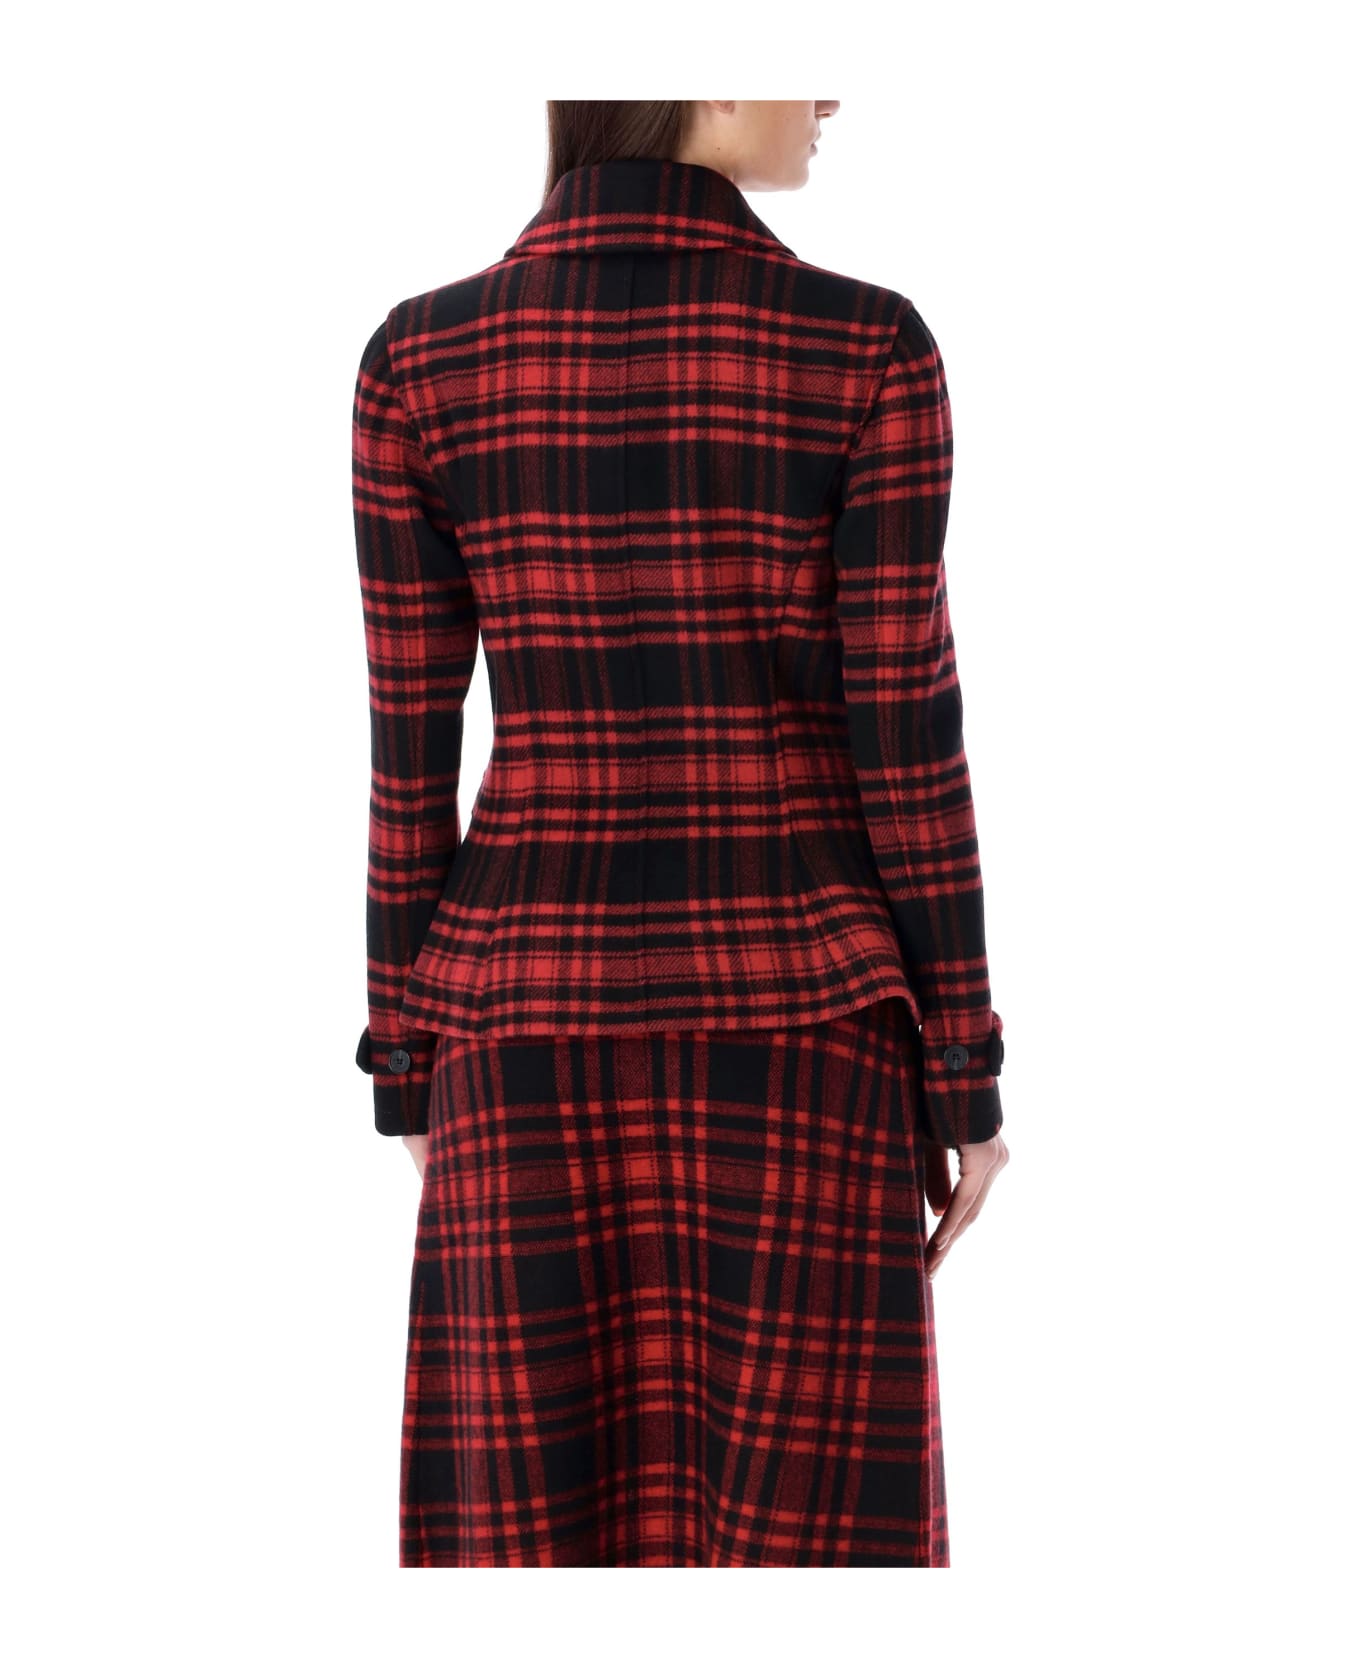 Polo Ralph Lauren Plaid Wool Twill Utility Jacket - RED BLACK PLAID ブレザー